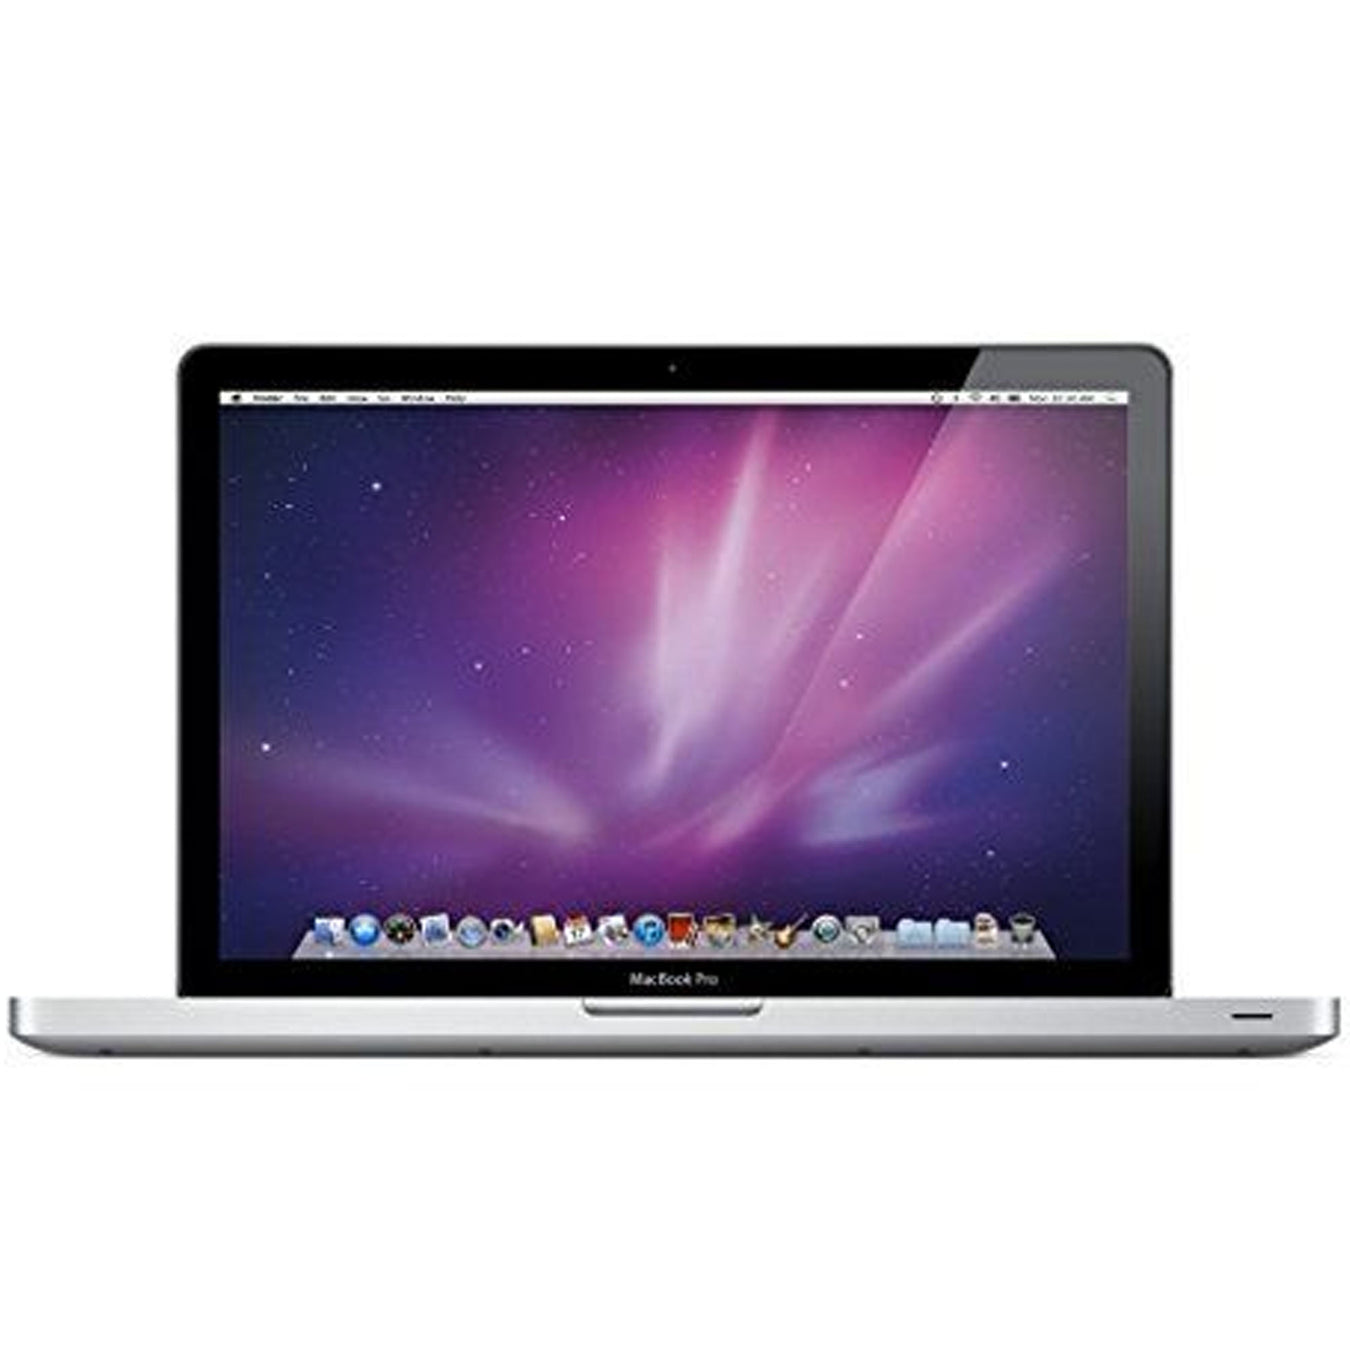 Apple MacBook Pro 17" A1297 Parts